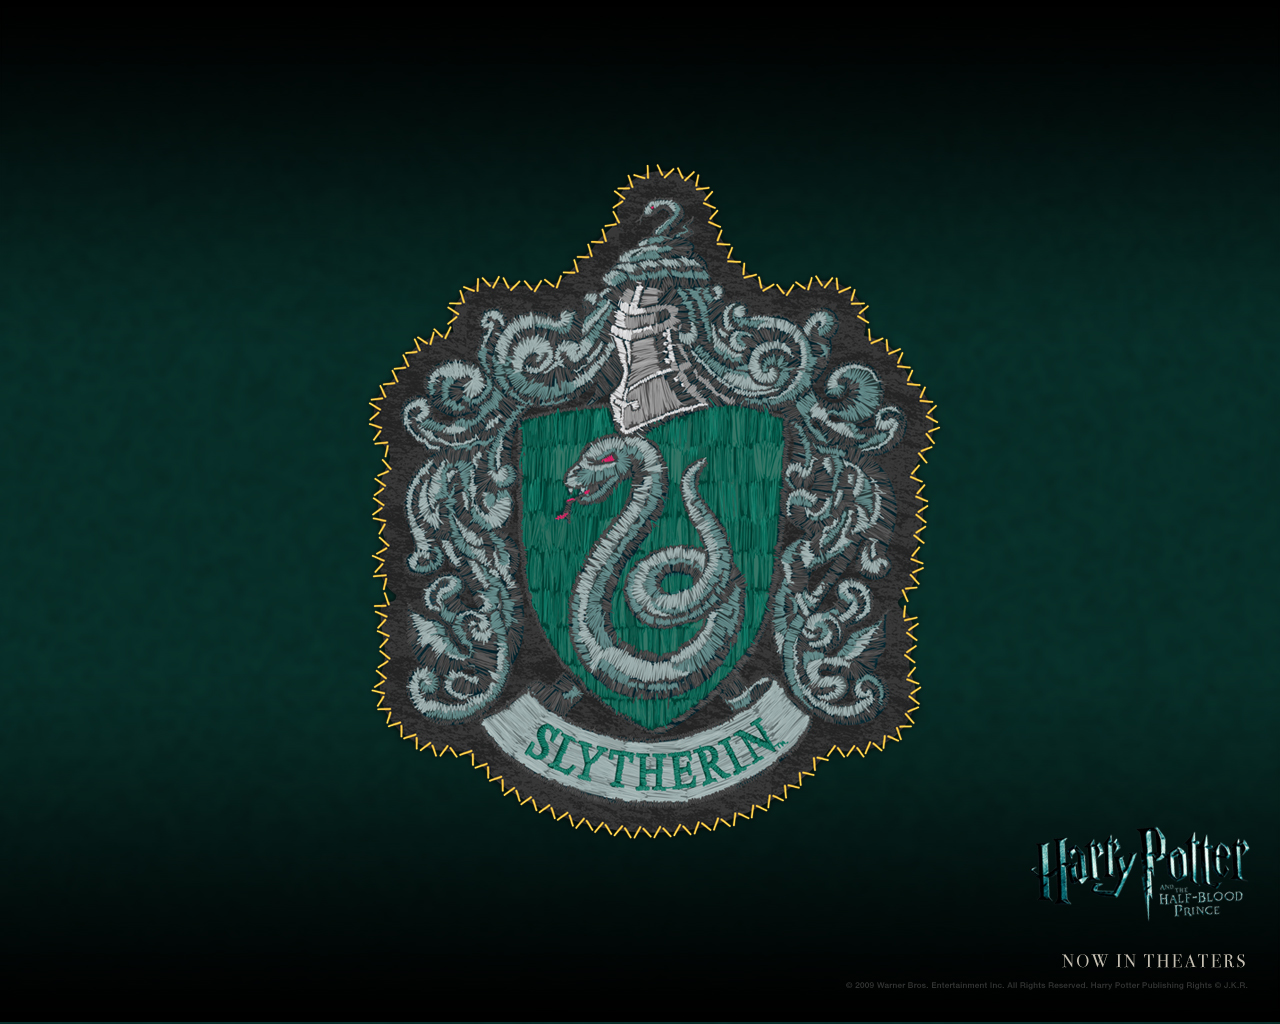 Wallpaper Slytherin Harrymedia Galer A De Fotos Harry Potter